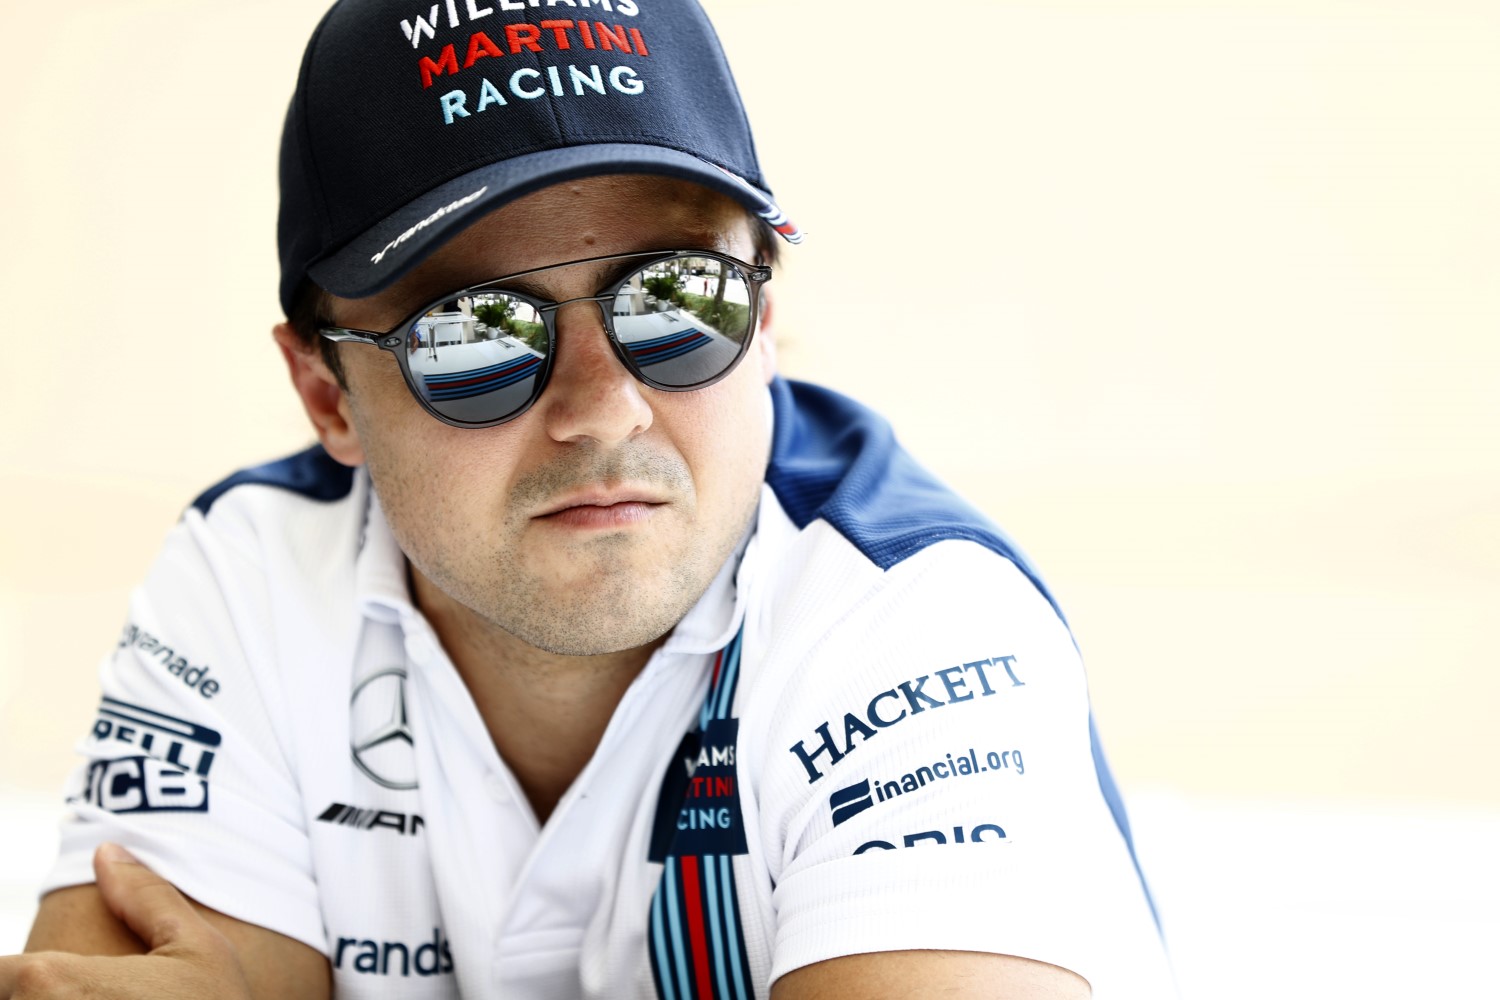 Felipe Massa warns Verstappen